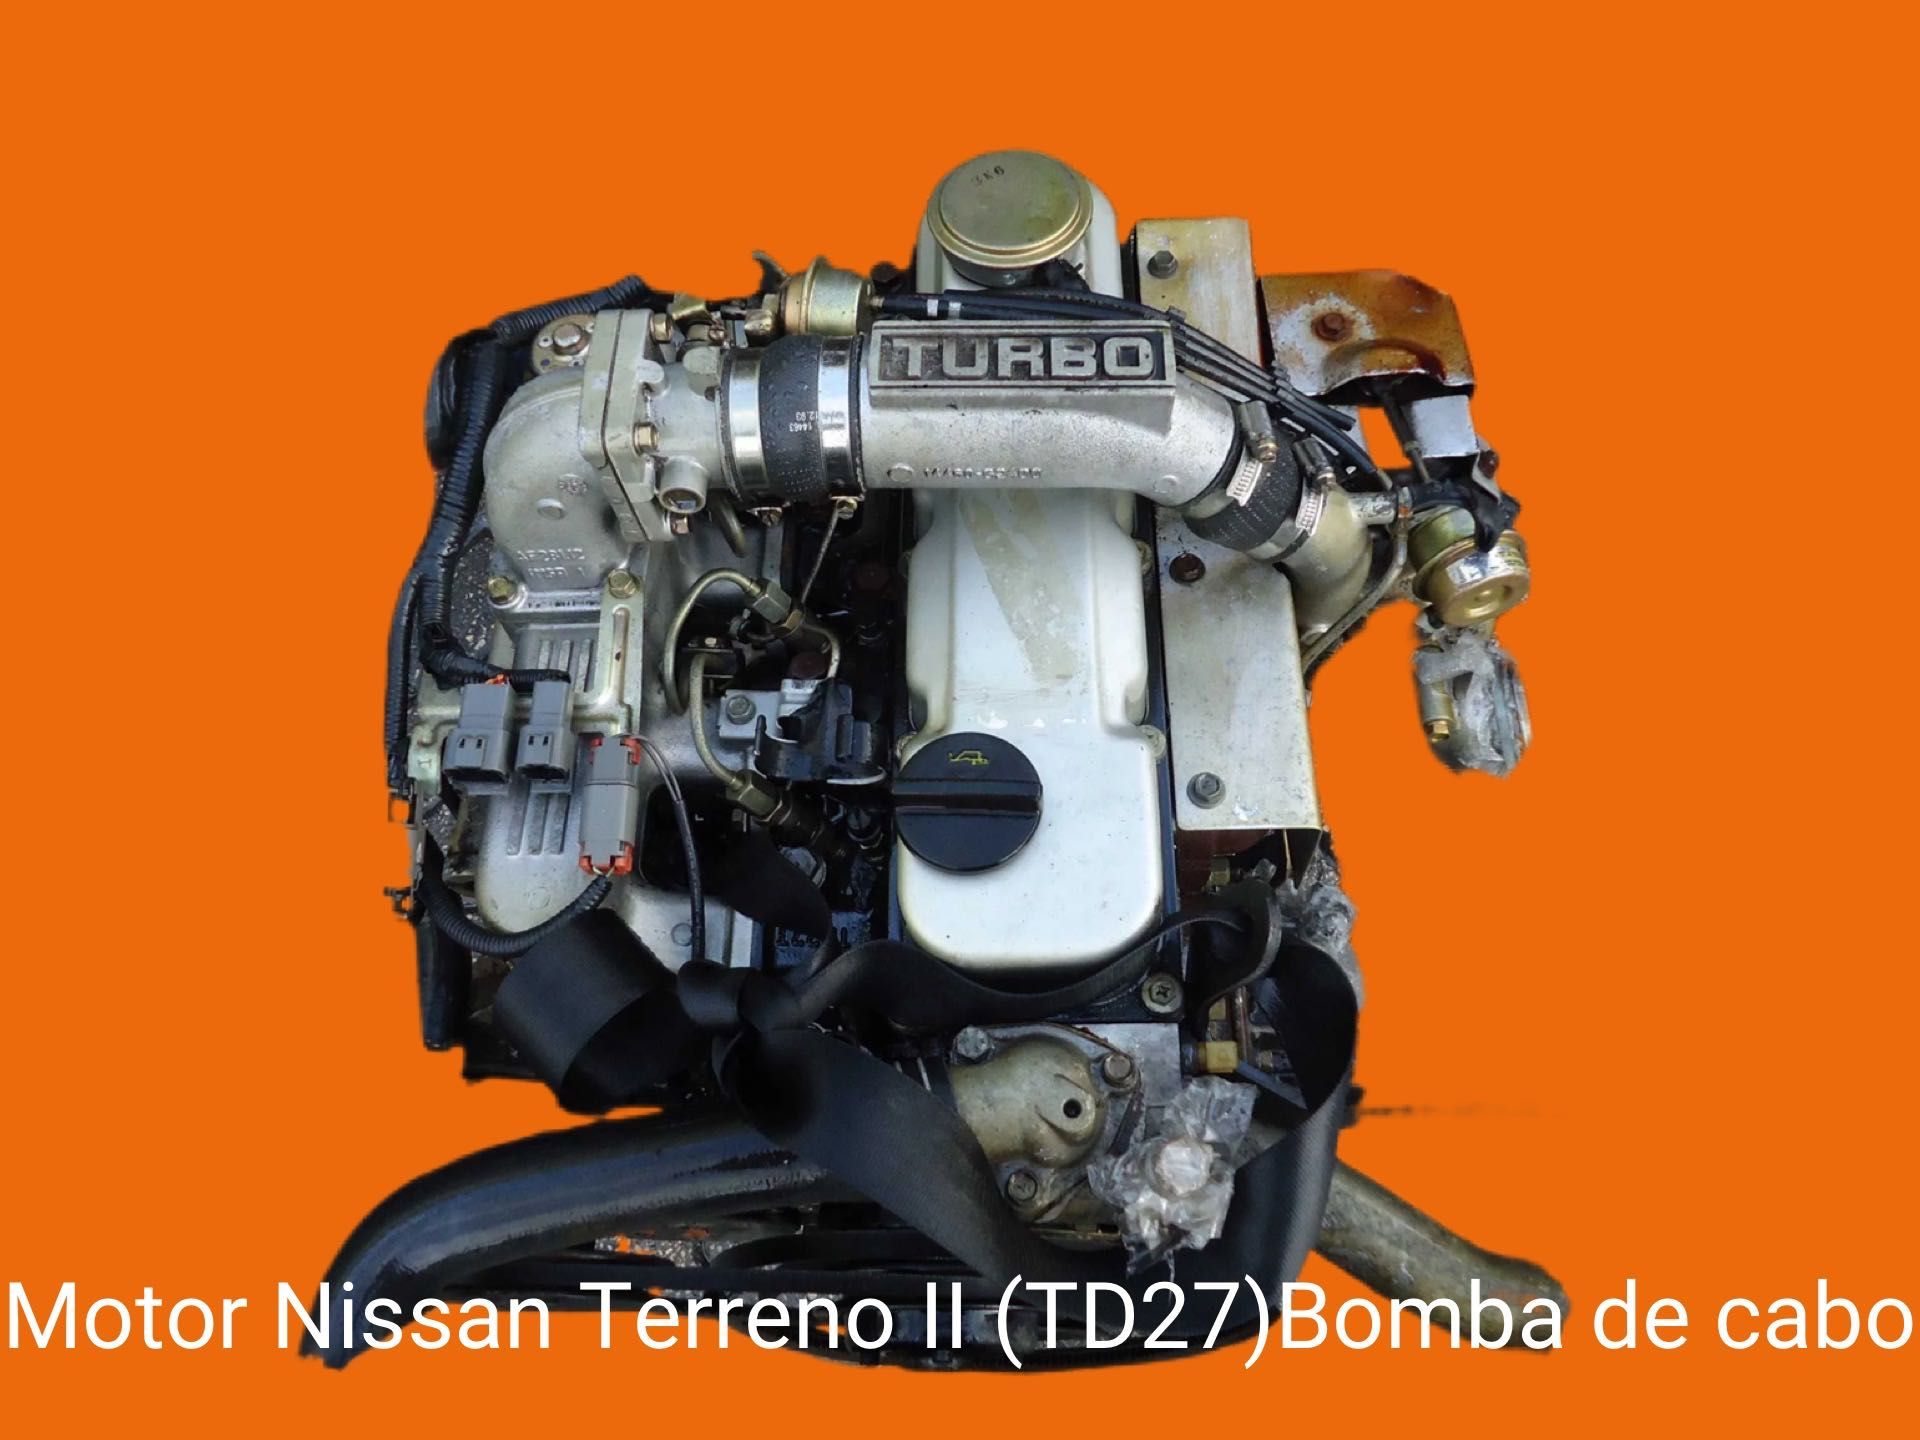 Motor Nissan Terreno II (TD27) Bomba de Cabo